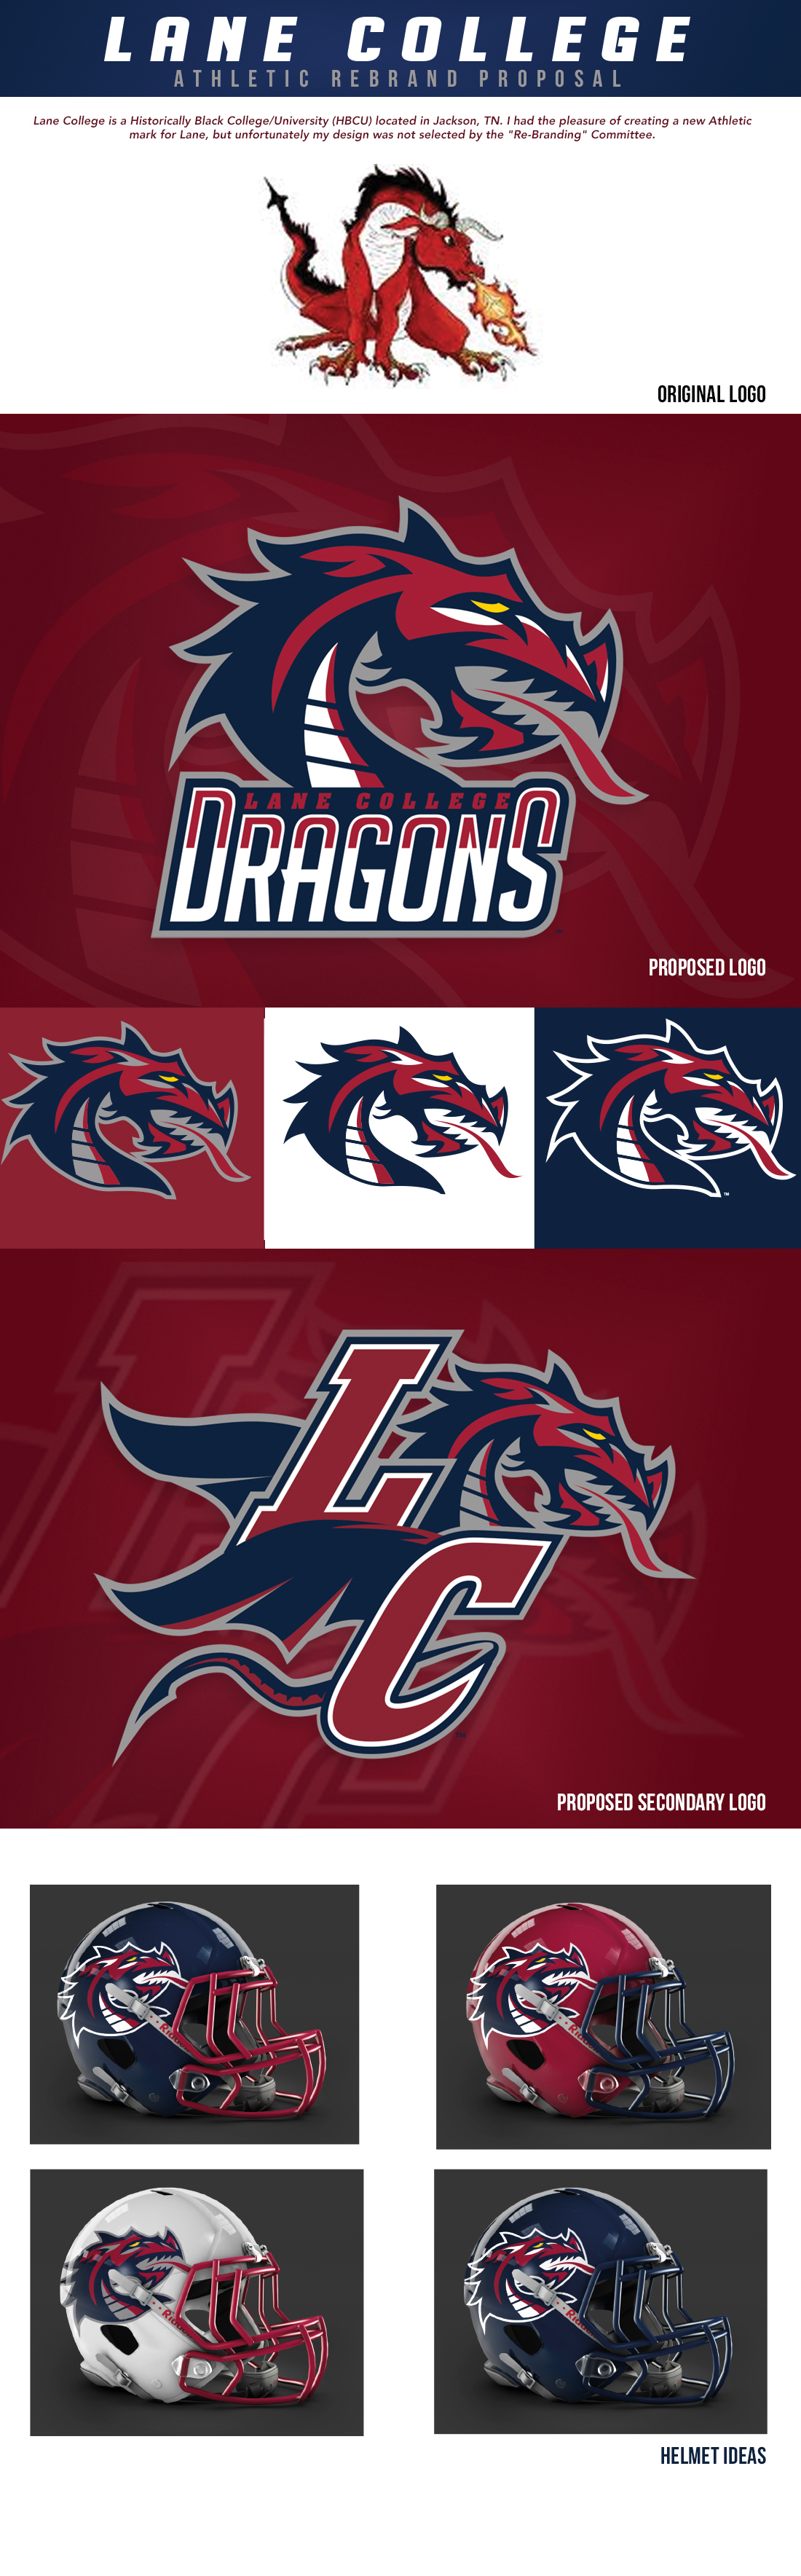 Sports Branding Identity Design brand creation Sports logo logo vector lane college HBCU